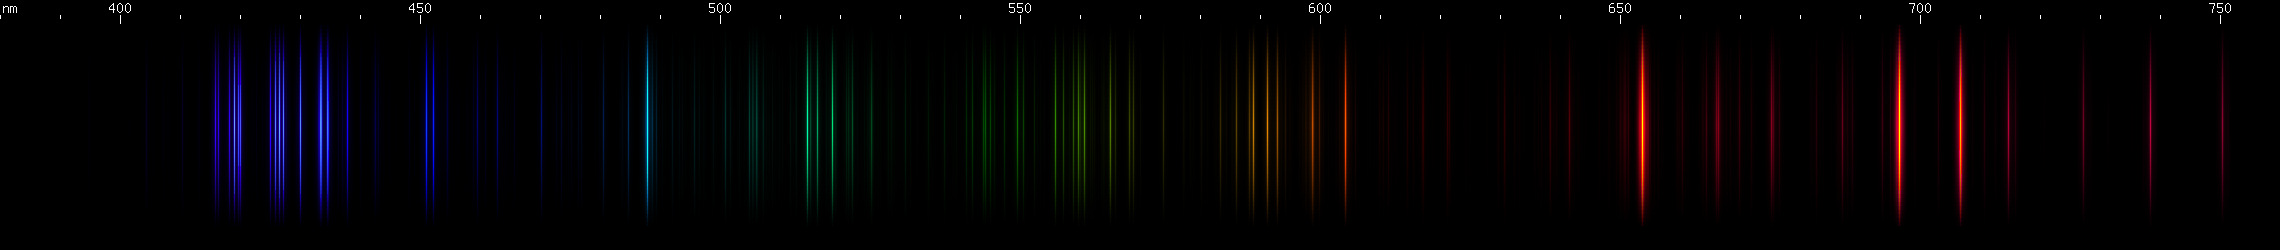 Spectral Lines of Argon